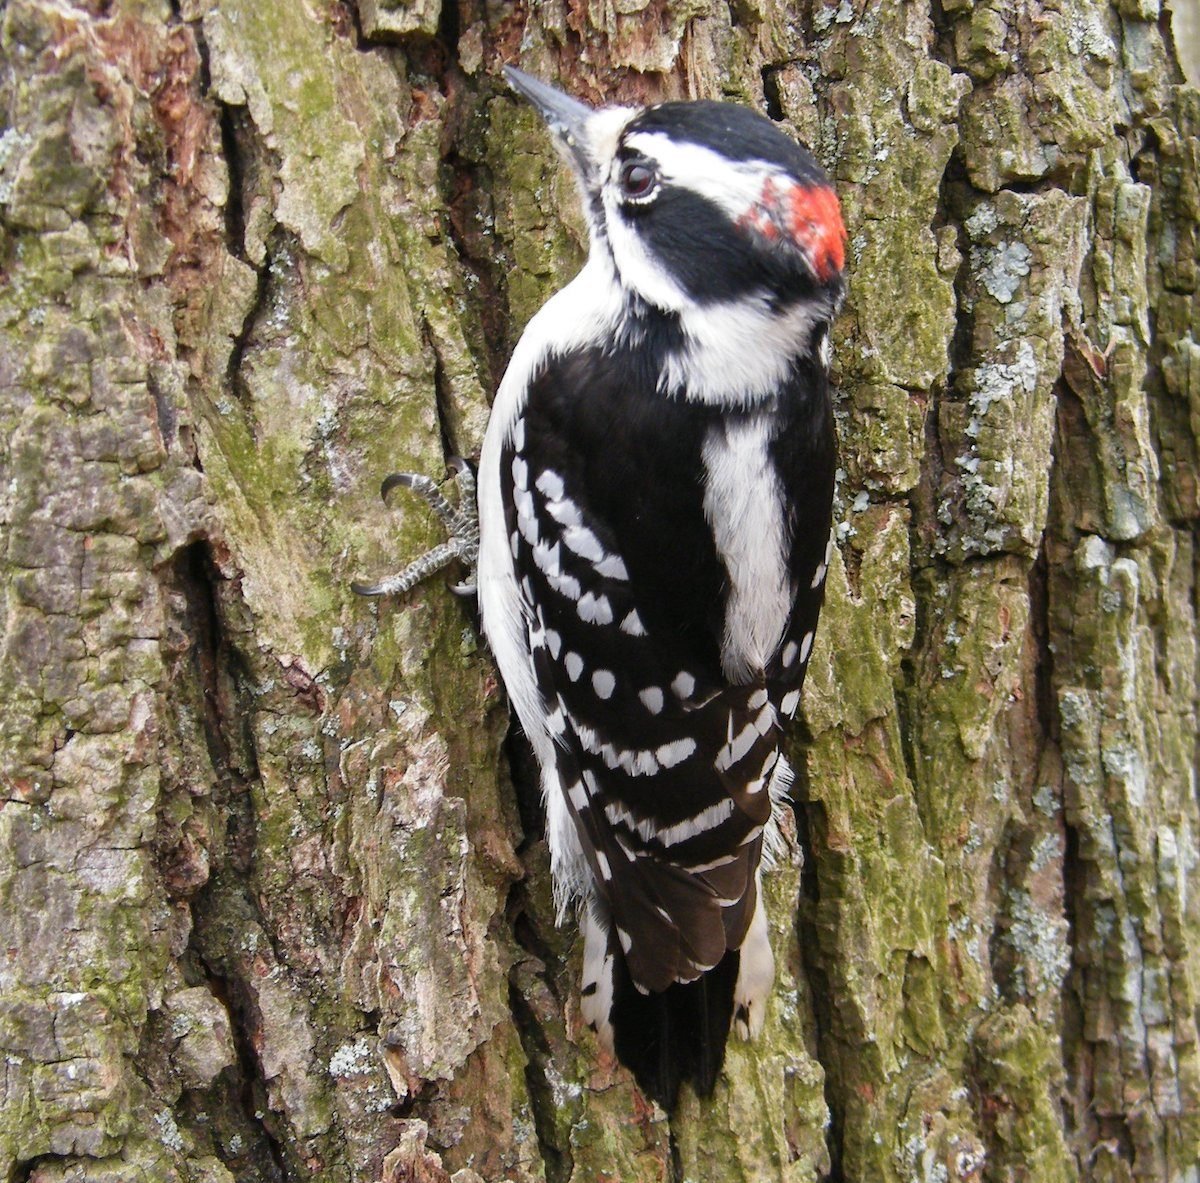 Downy Woodpecker: Meet the Downies